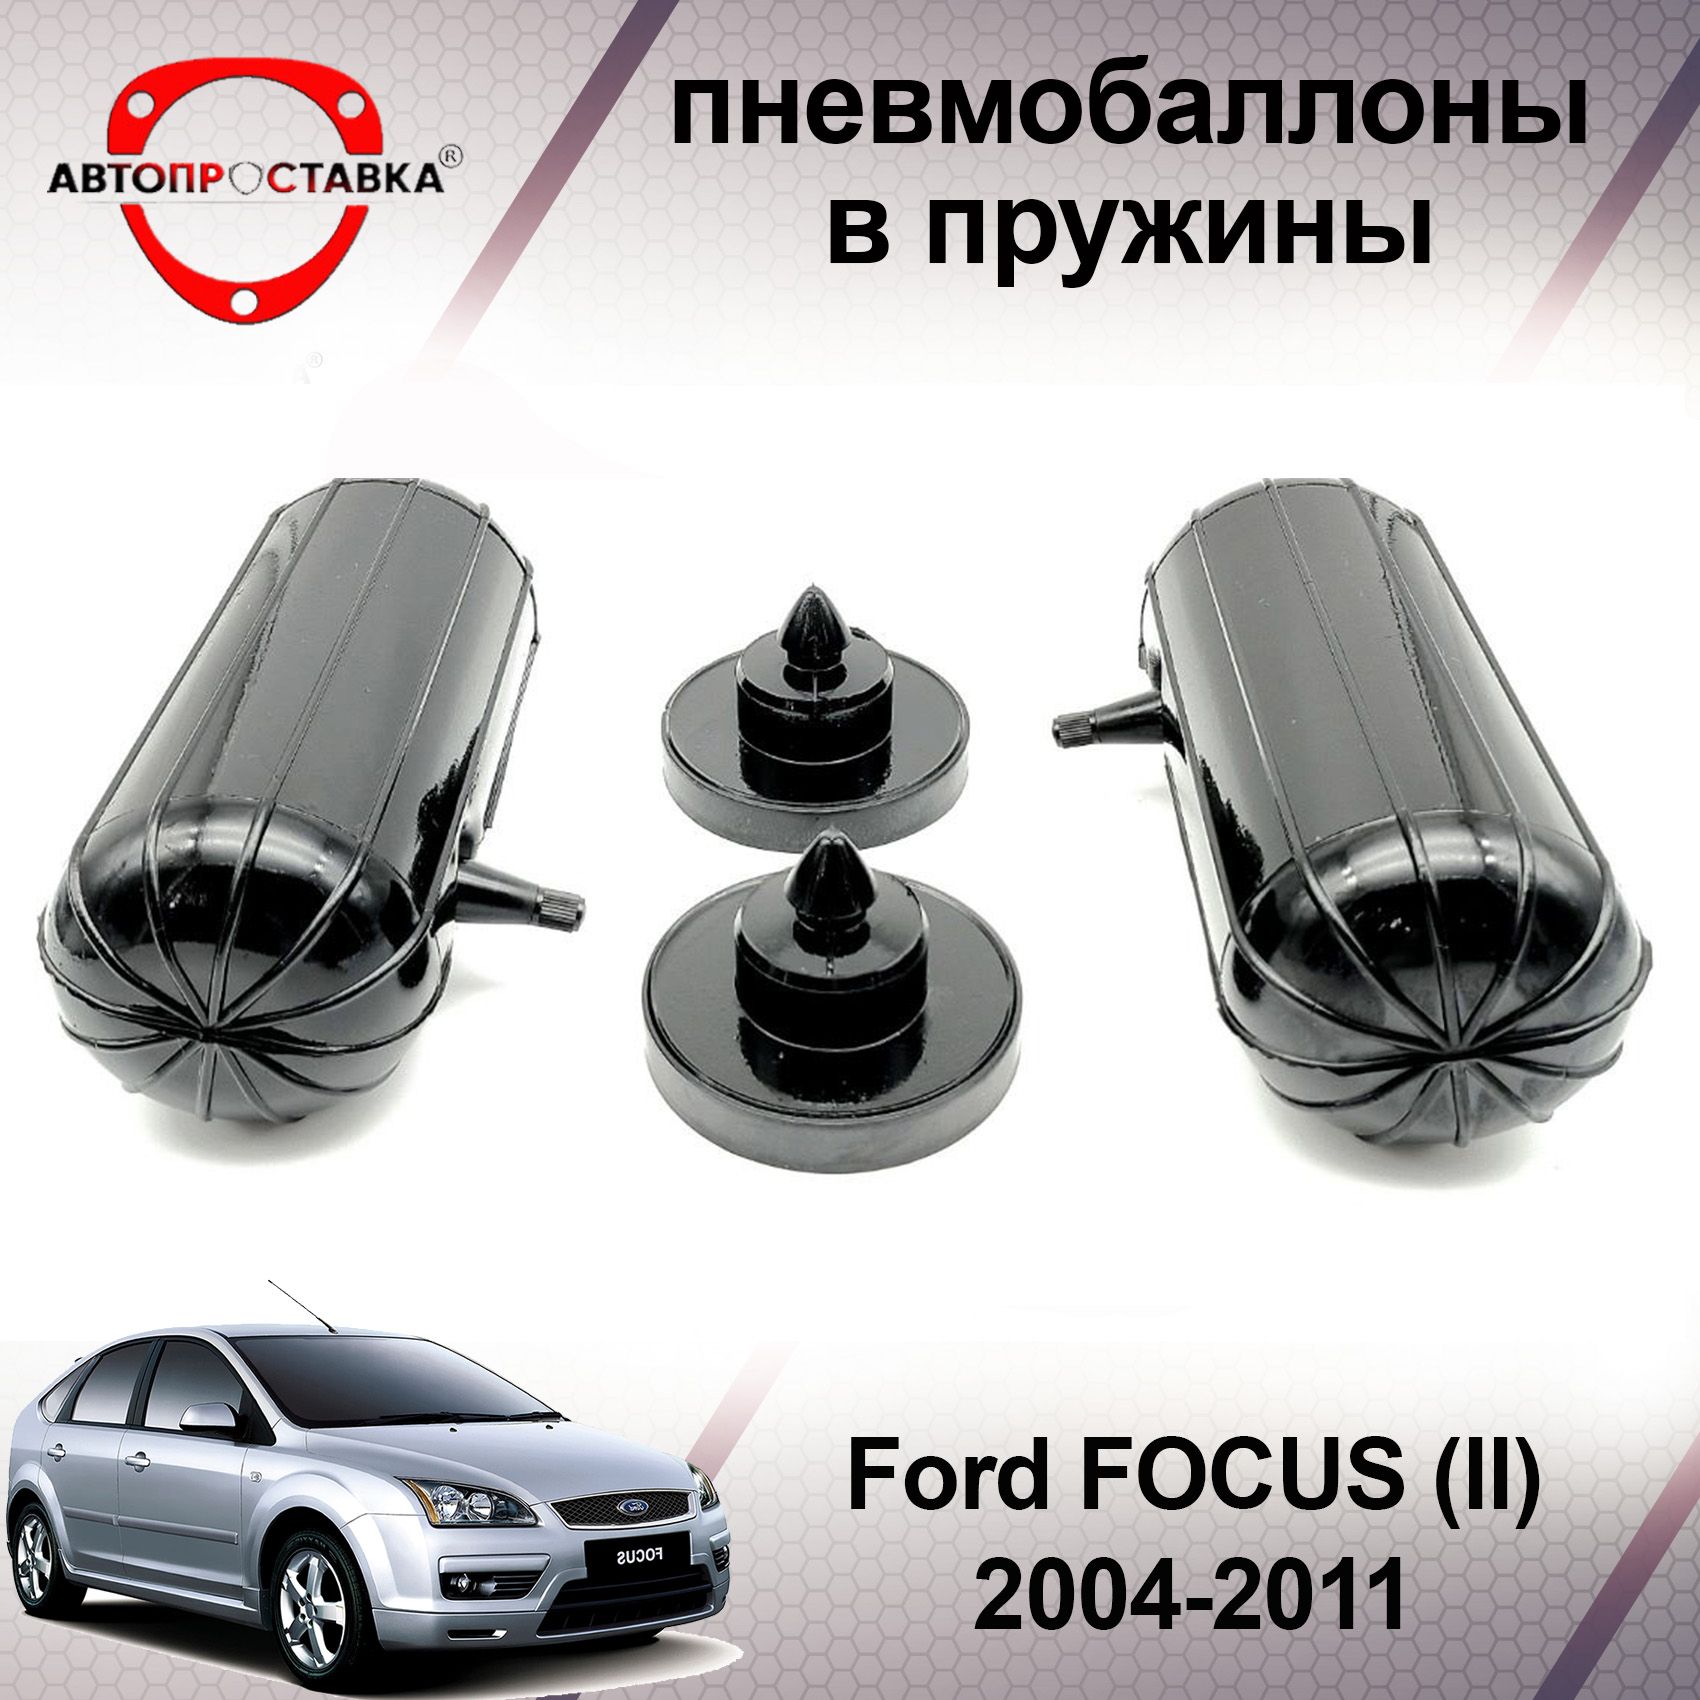 Антикоррозийная обработка кузова. - Ford Focus 3